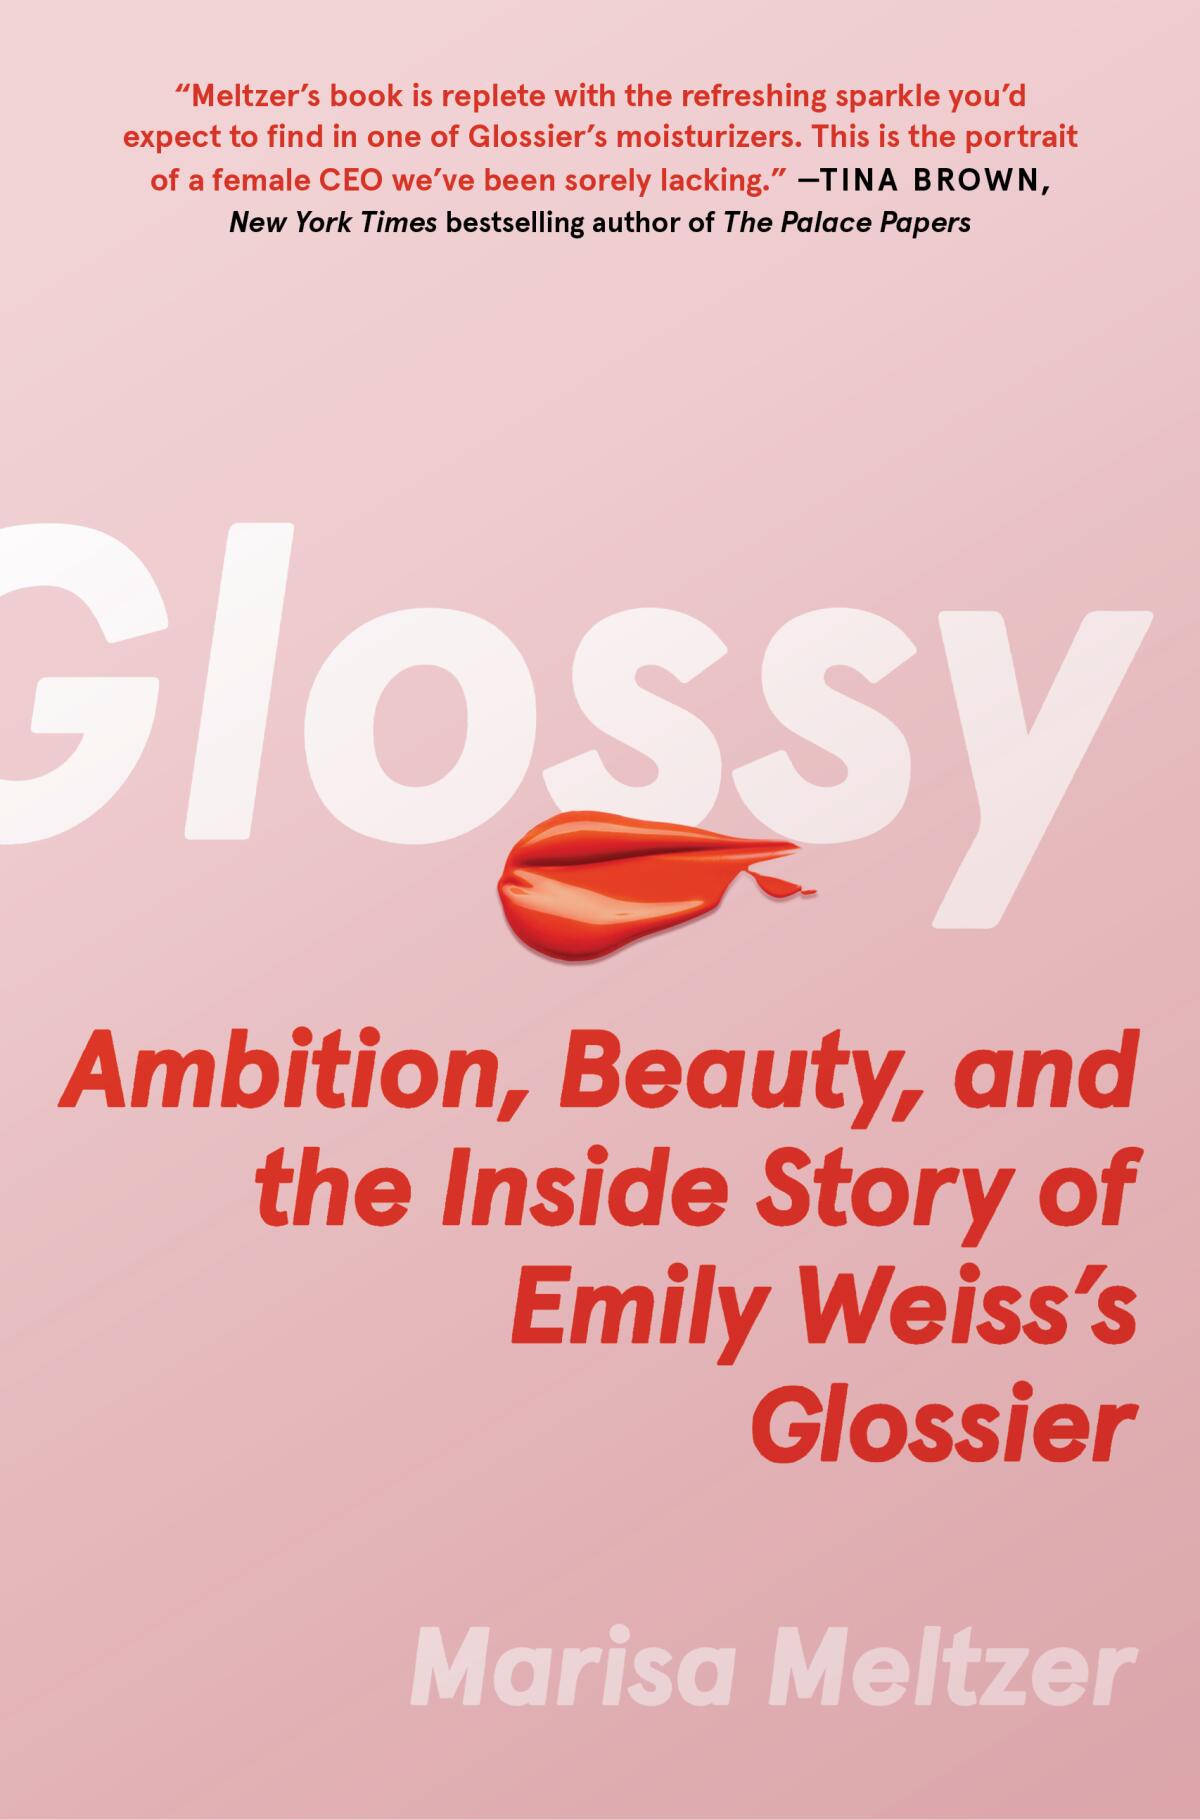 "Glossy," by Marisa Meltzer